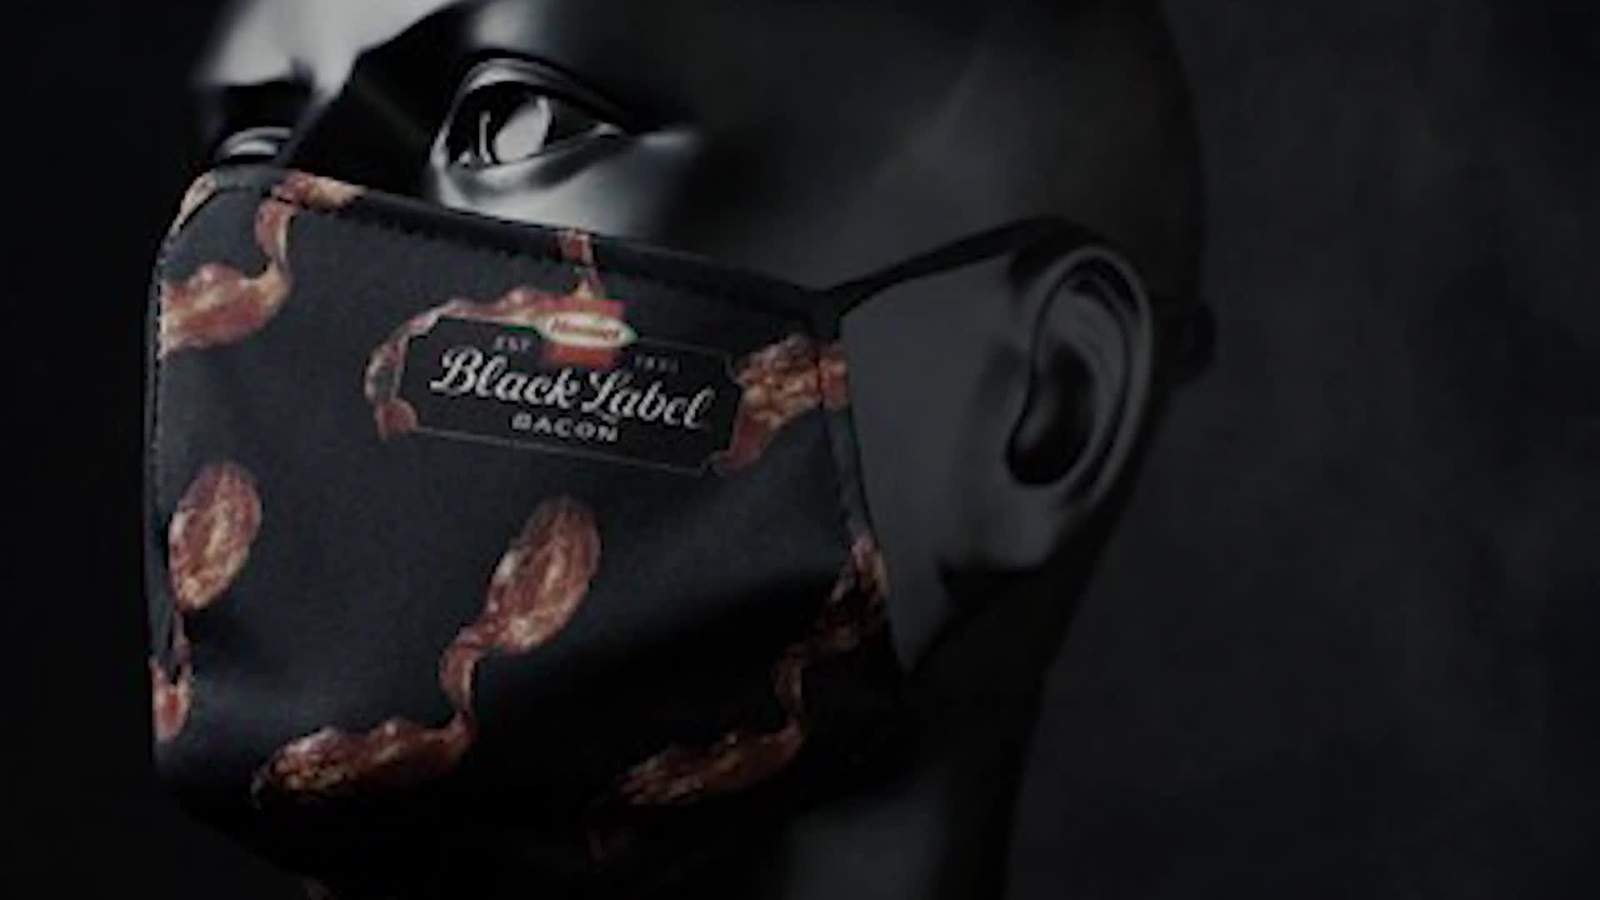 ‘Pork-scented technology:’ Hormel foods giving away bacon-scented masks